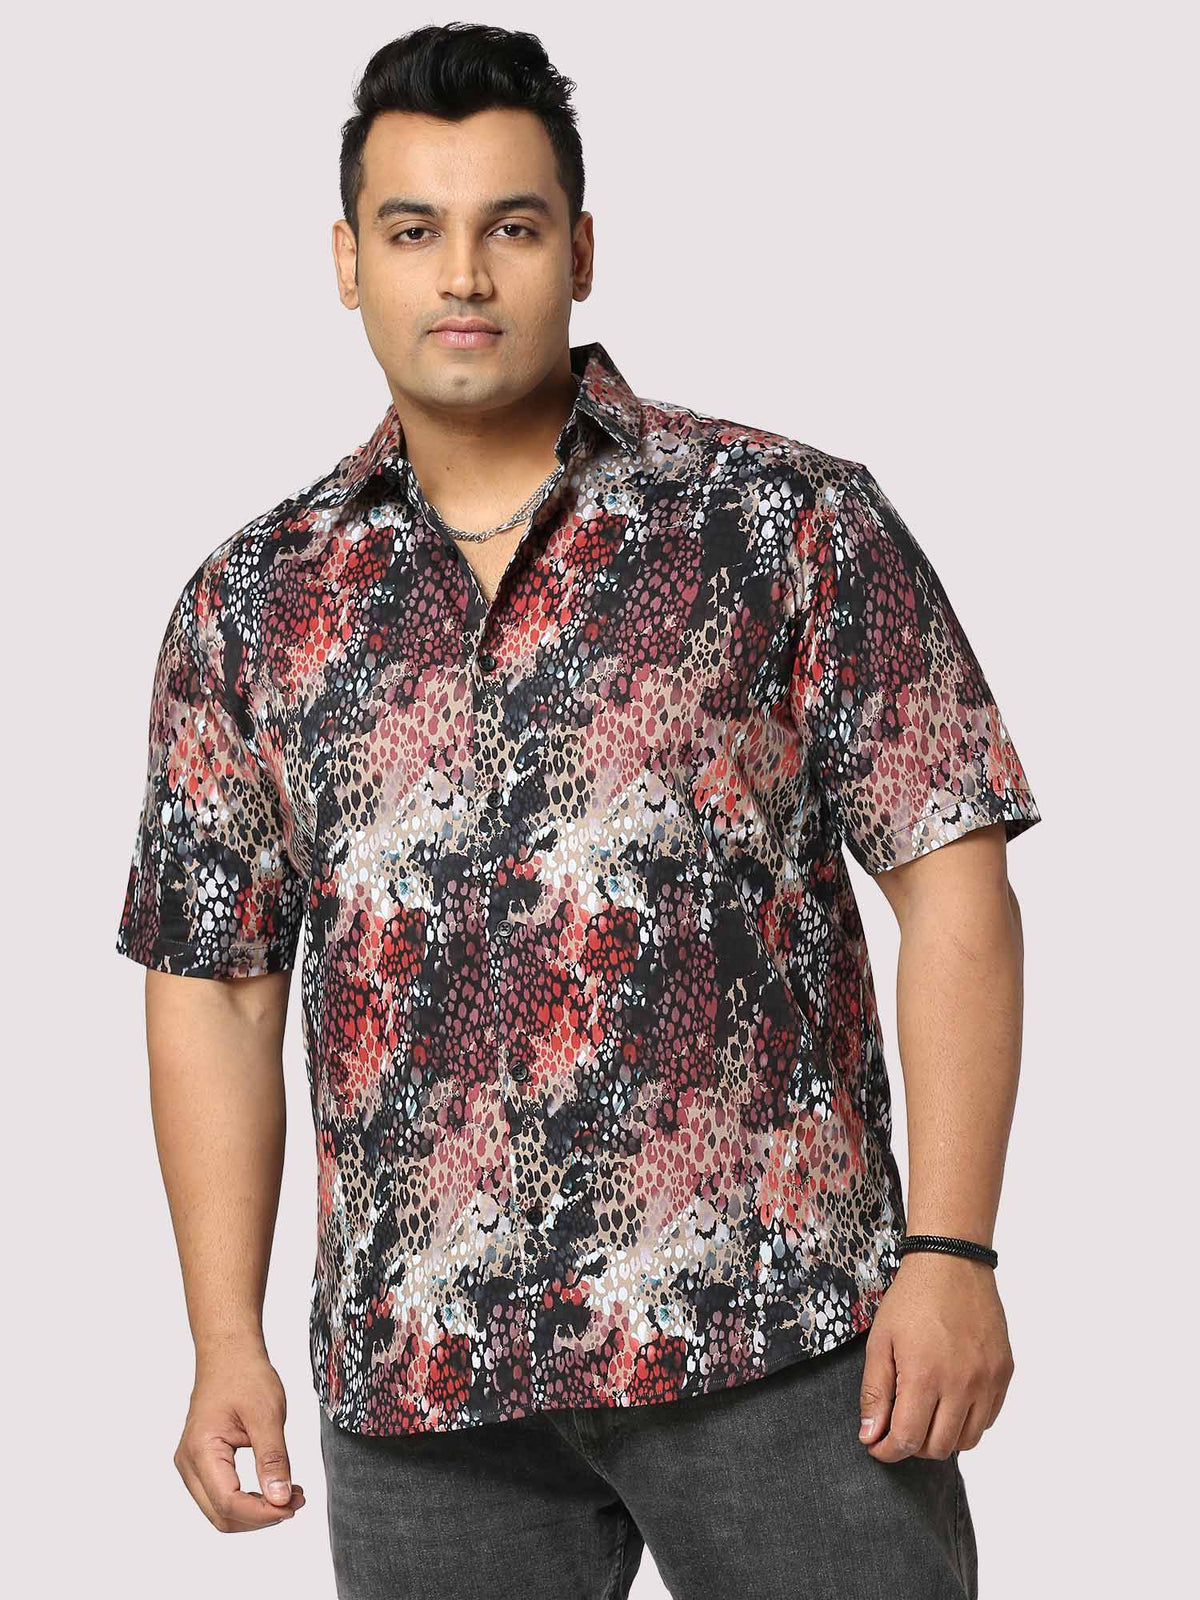 Disco Half Sleeves Digital Printed Shirt - Guniaa Fashions